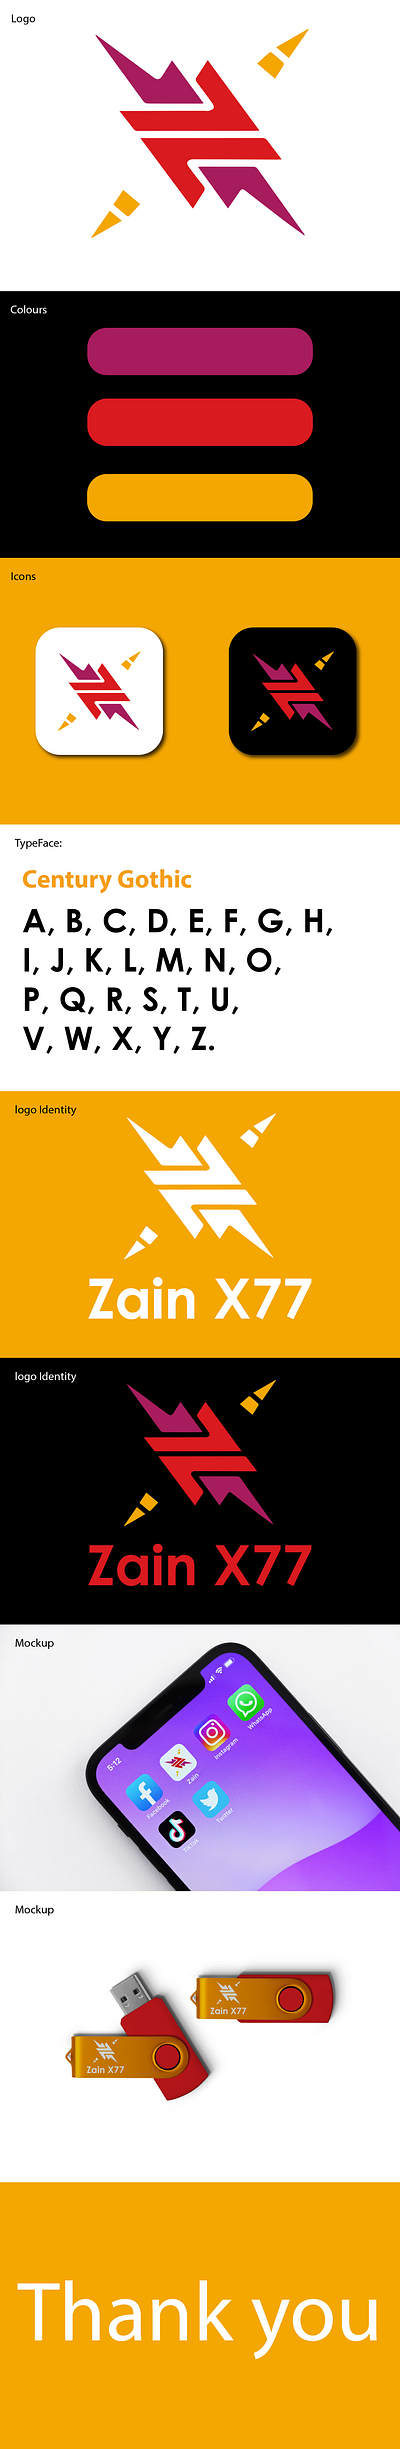 Logo Design - Zain Logo Design branding graphic design logo ui zain identity.